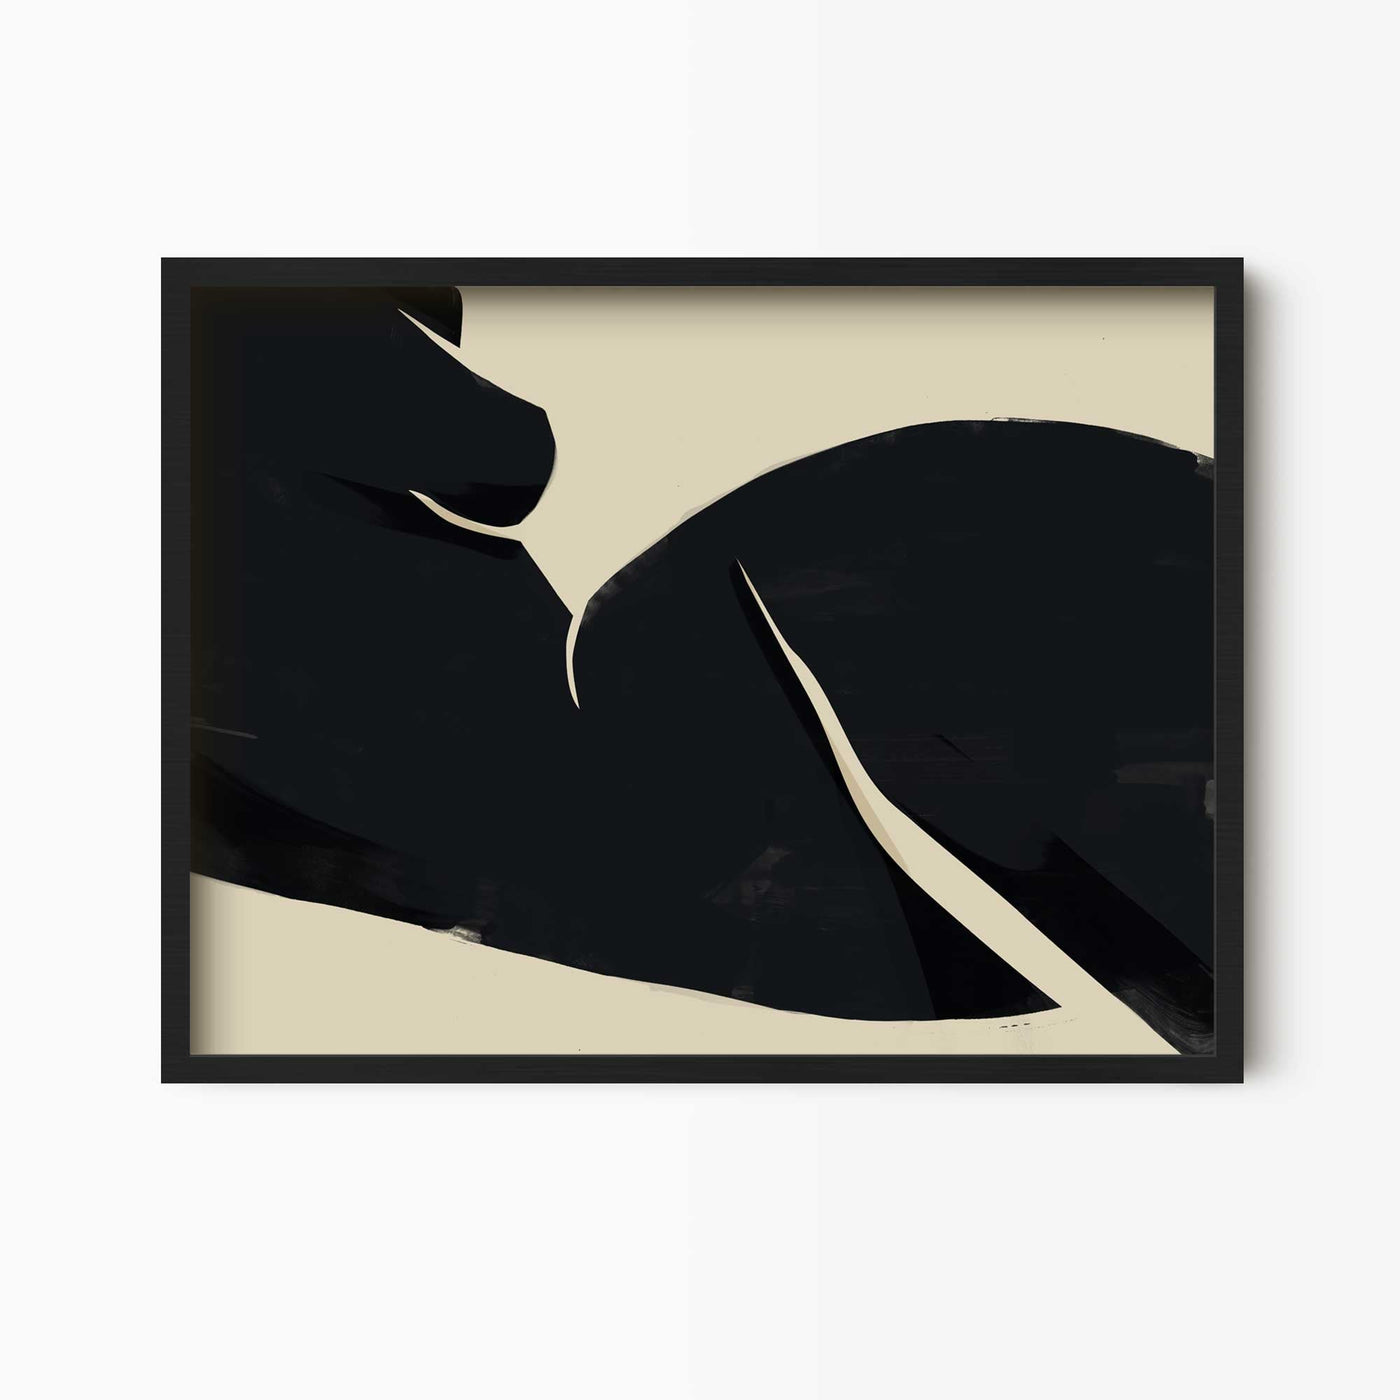 Green Lili 40x30cm (16x12") / Black Frame Abstract Nude Print